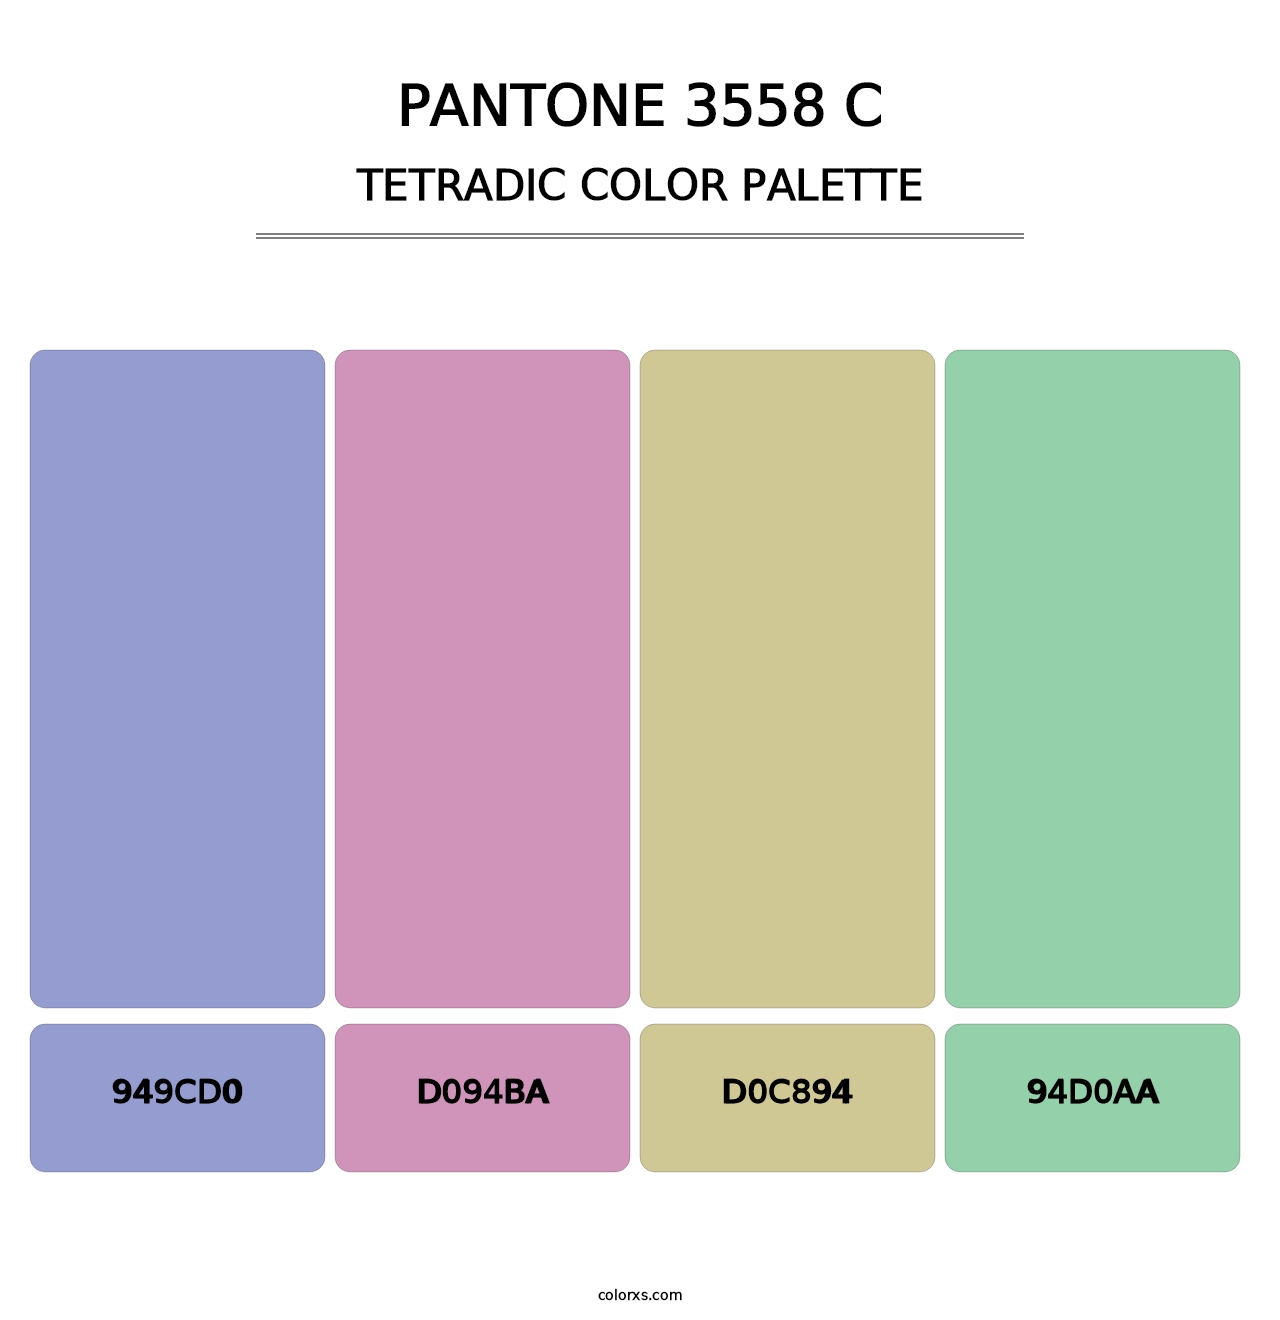 PANTONE 3558 C - Tetradic Color Palette